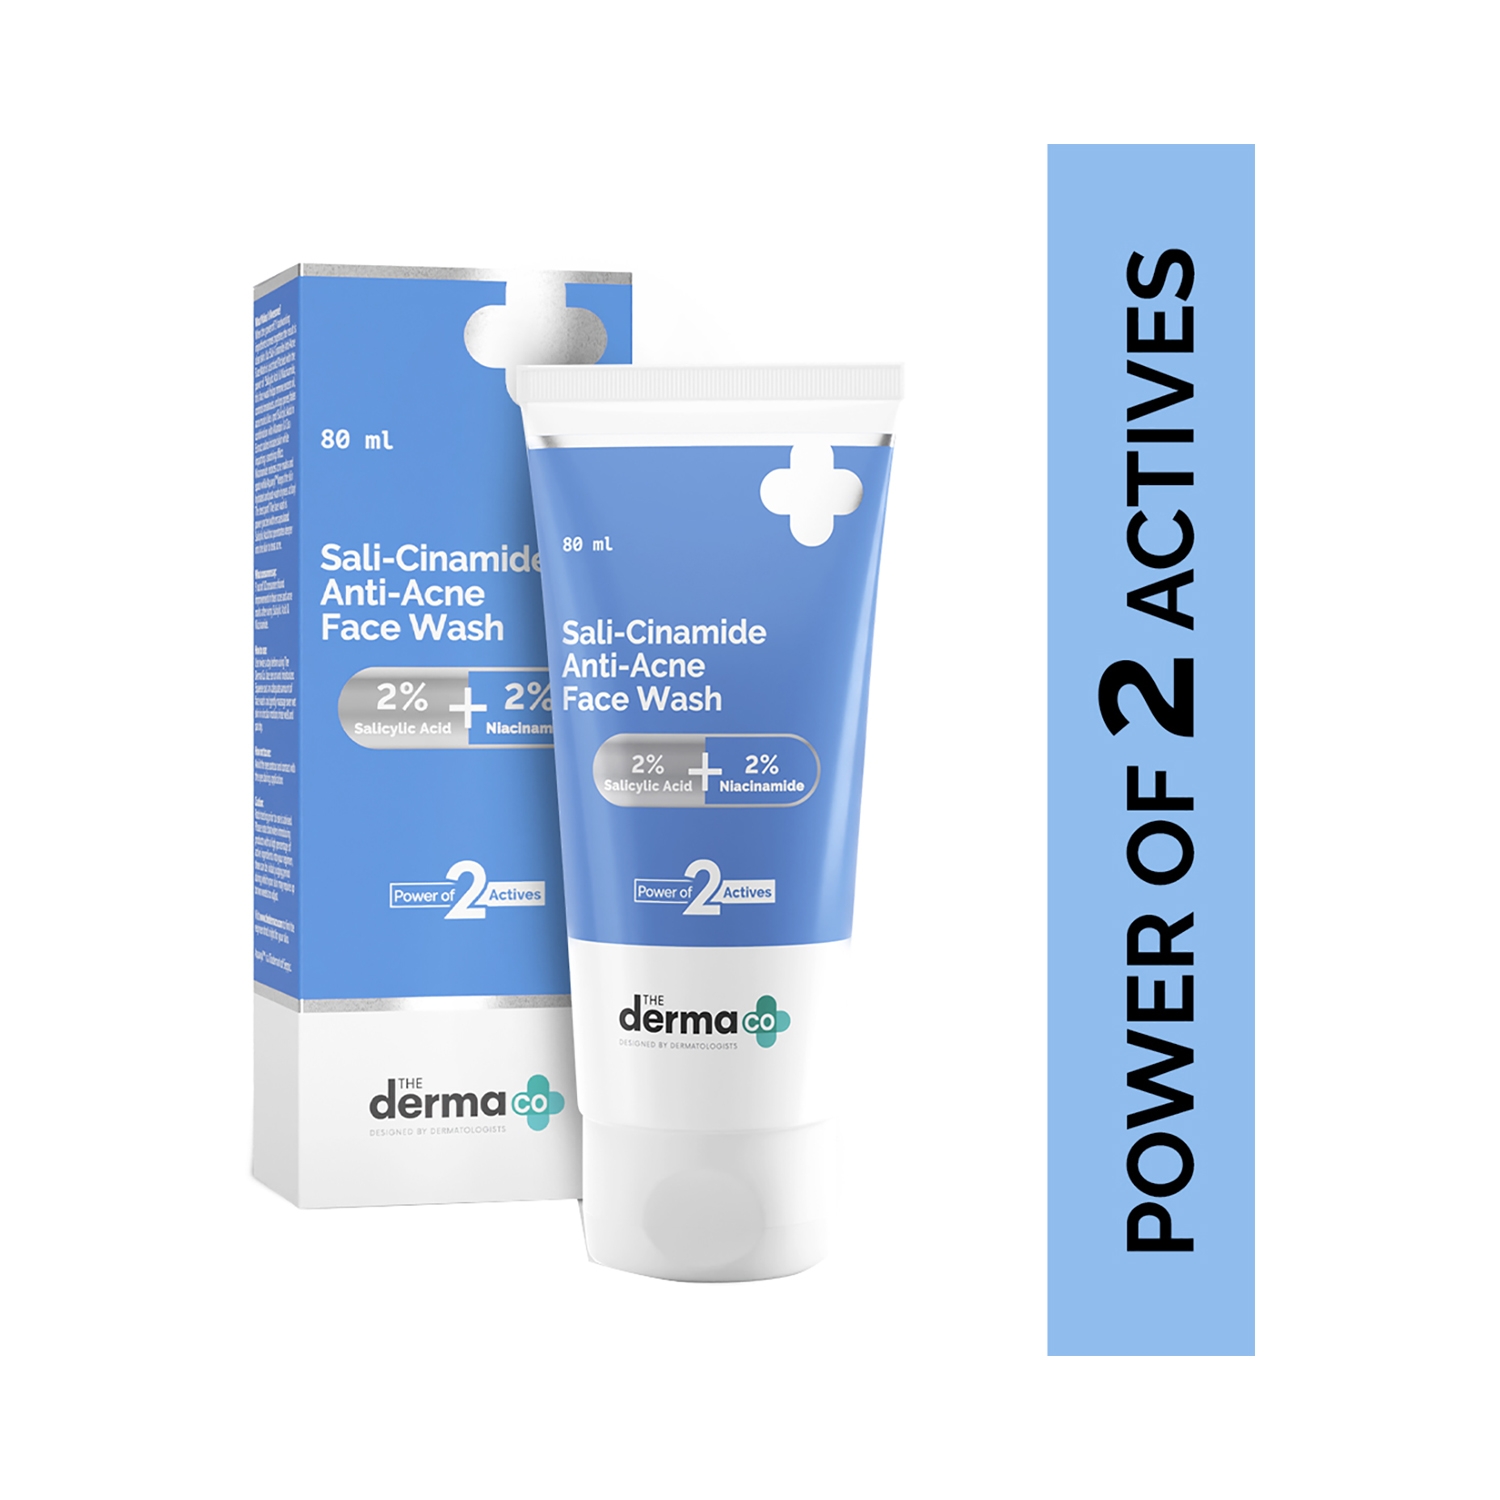 The Derma Co | The Derma Co. Sali-Cinamide Anti-Acne Face Wash With 2% Salicylic Acid & 2% Niacinamide (100ml)